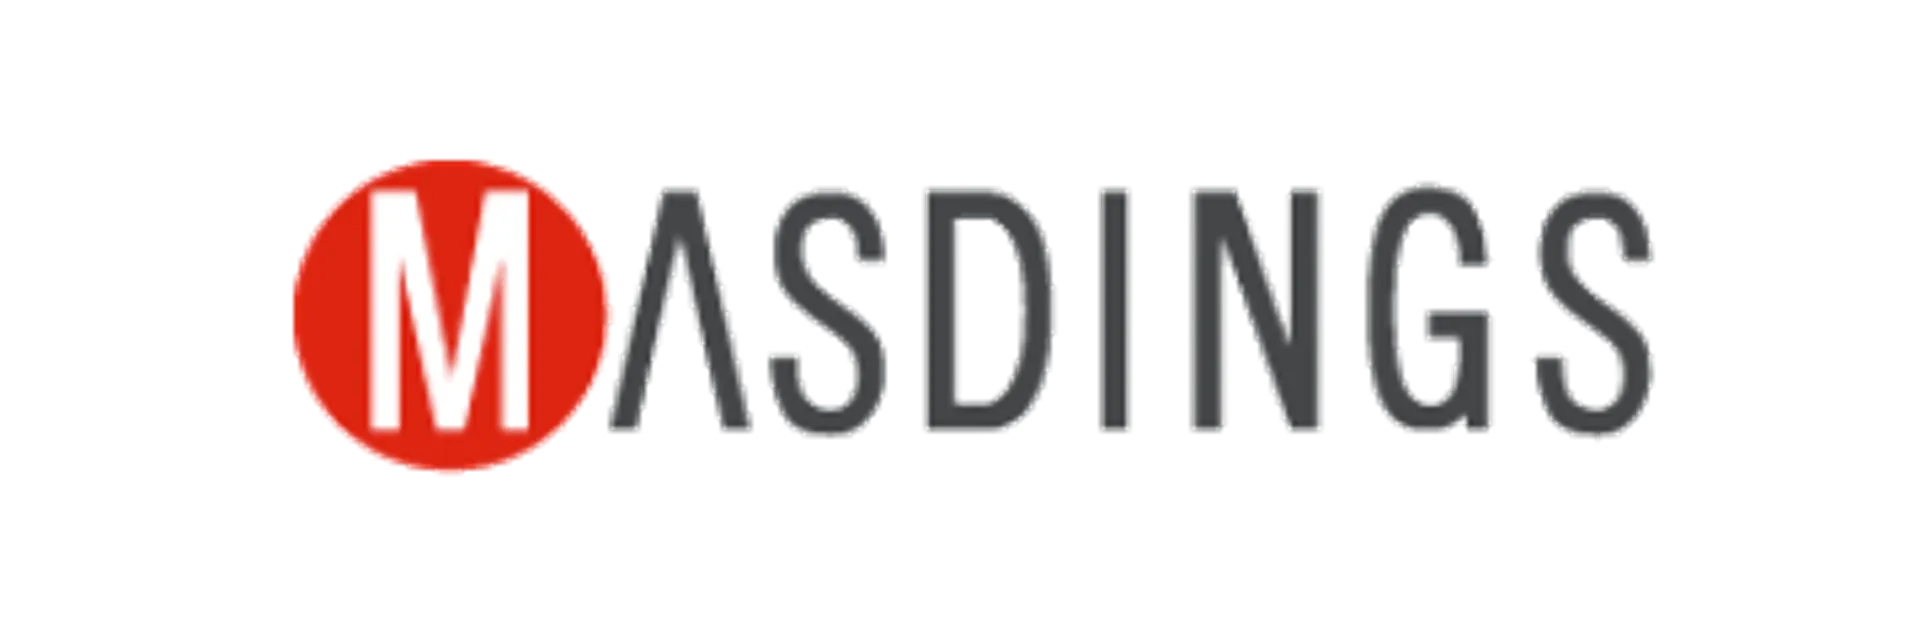 MASDINGS logo. Current catalogue